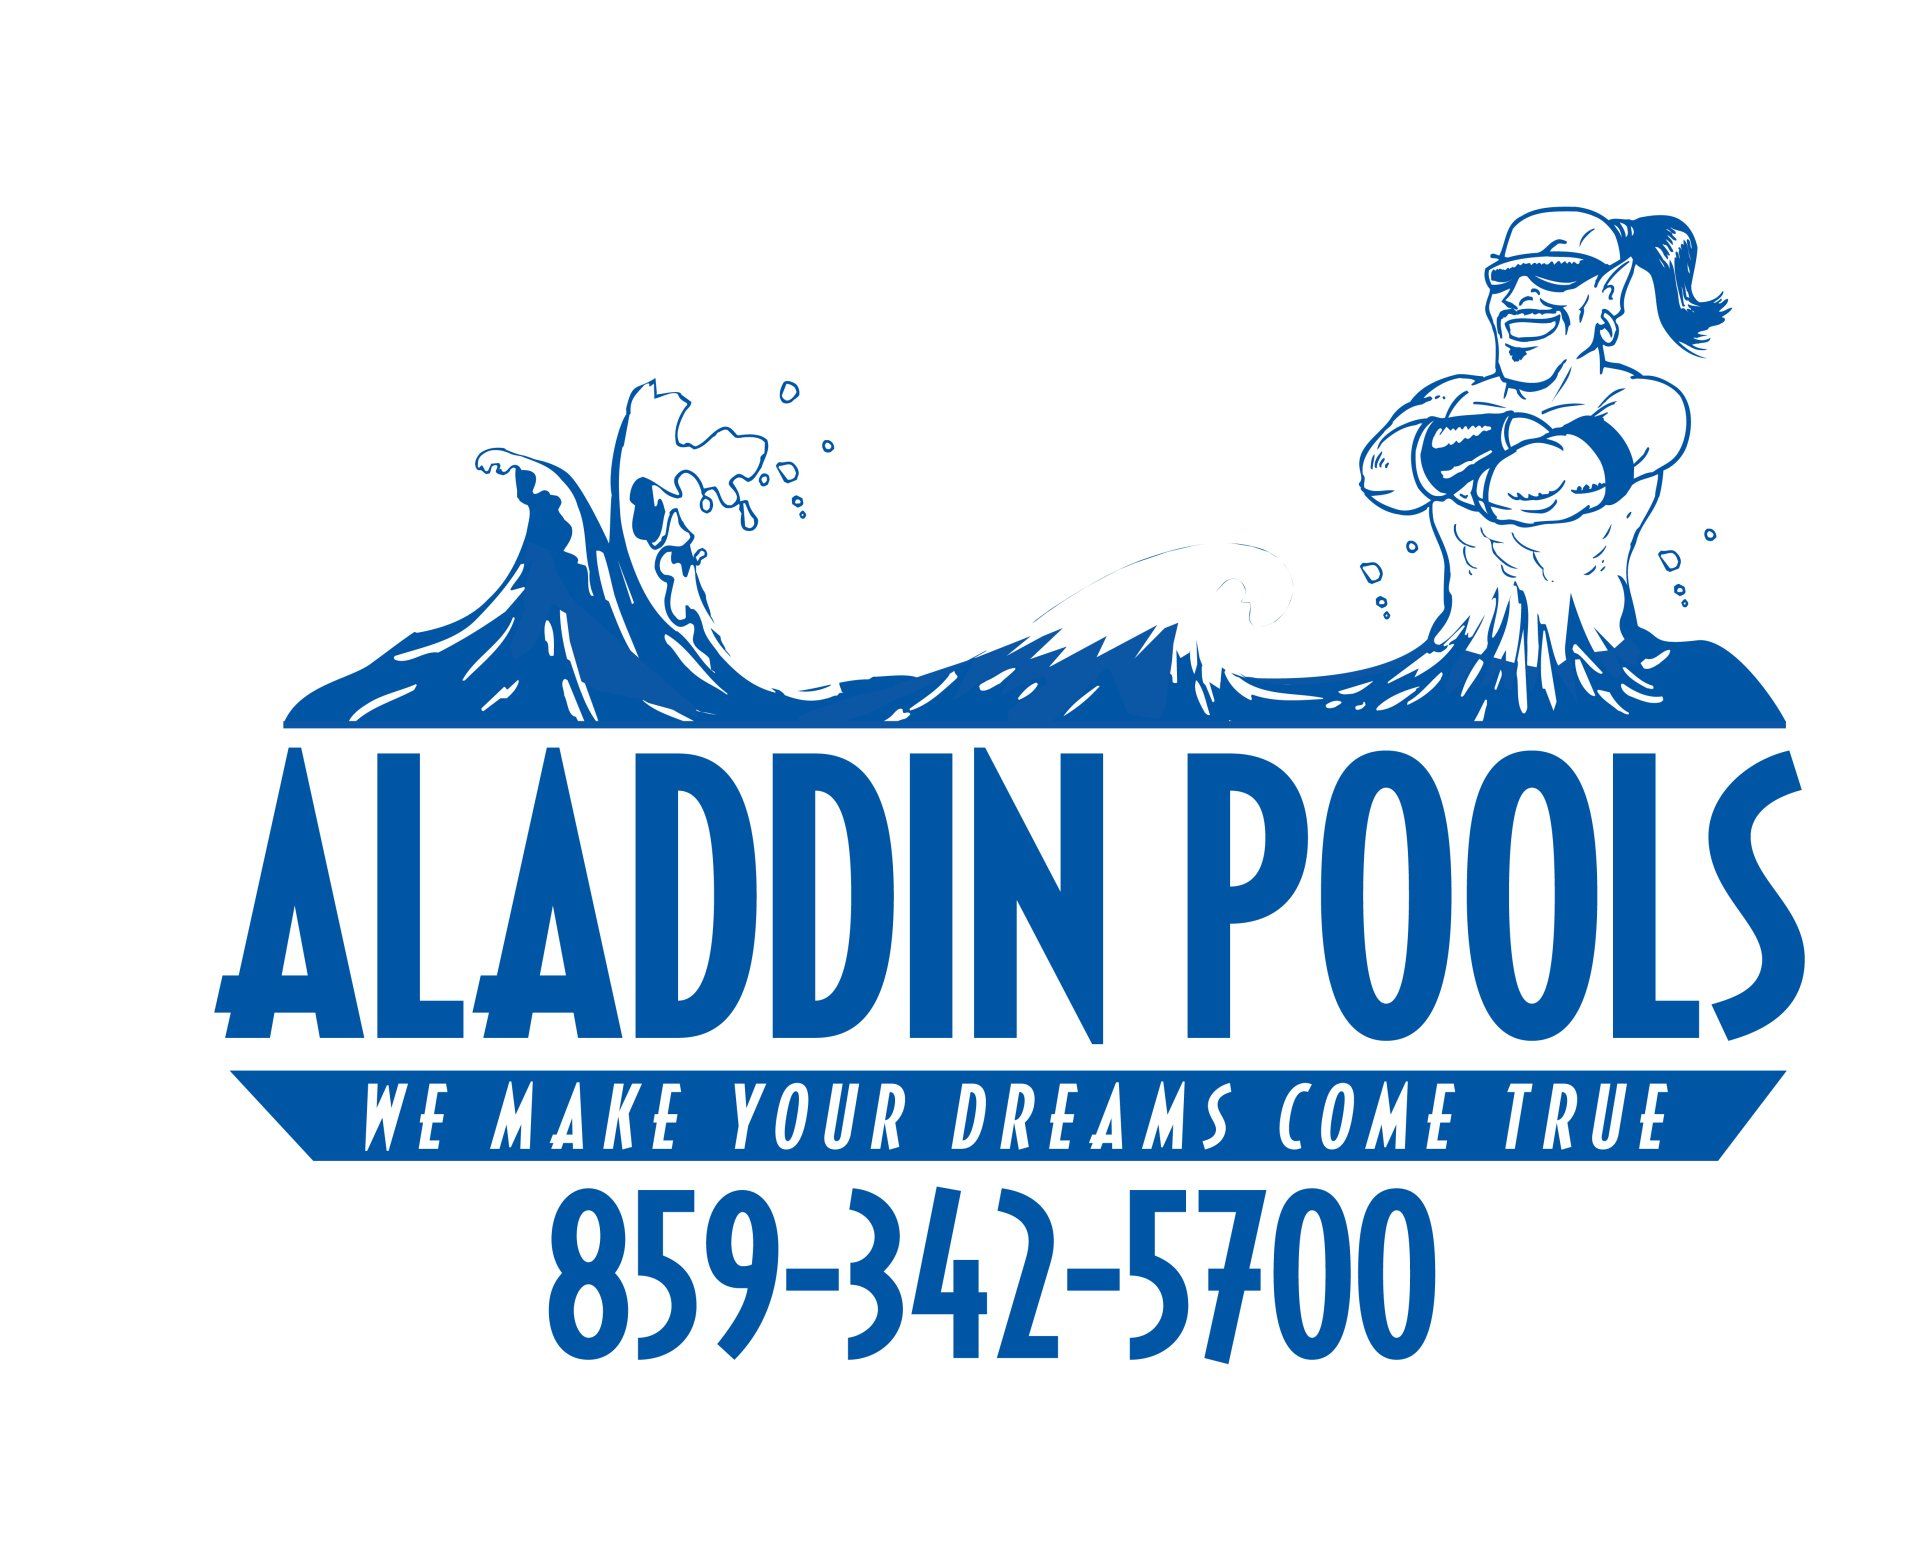 (c) Aladdinpools.com